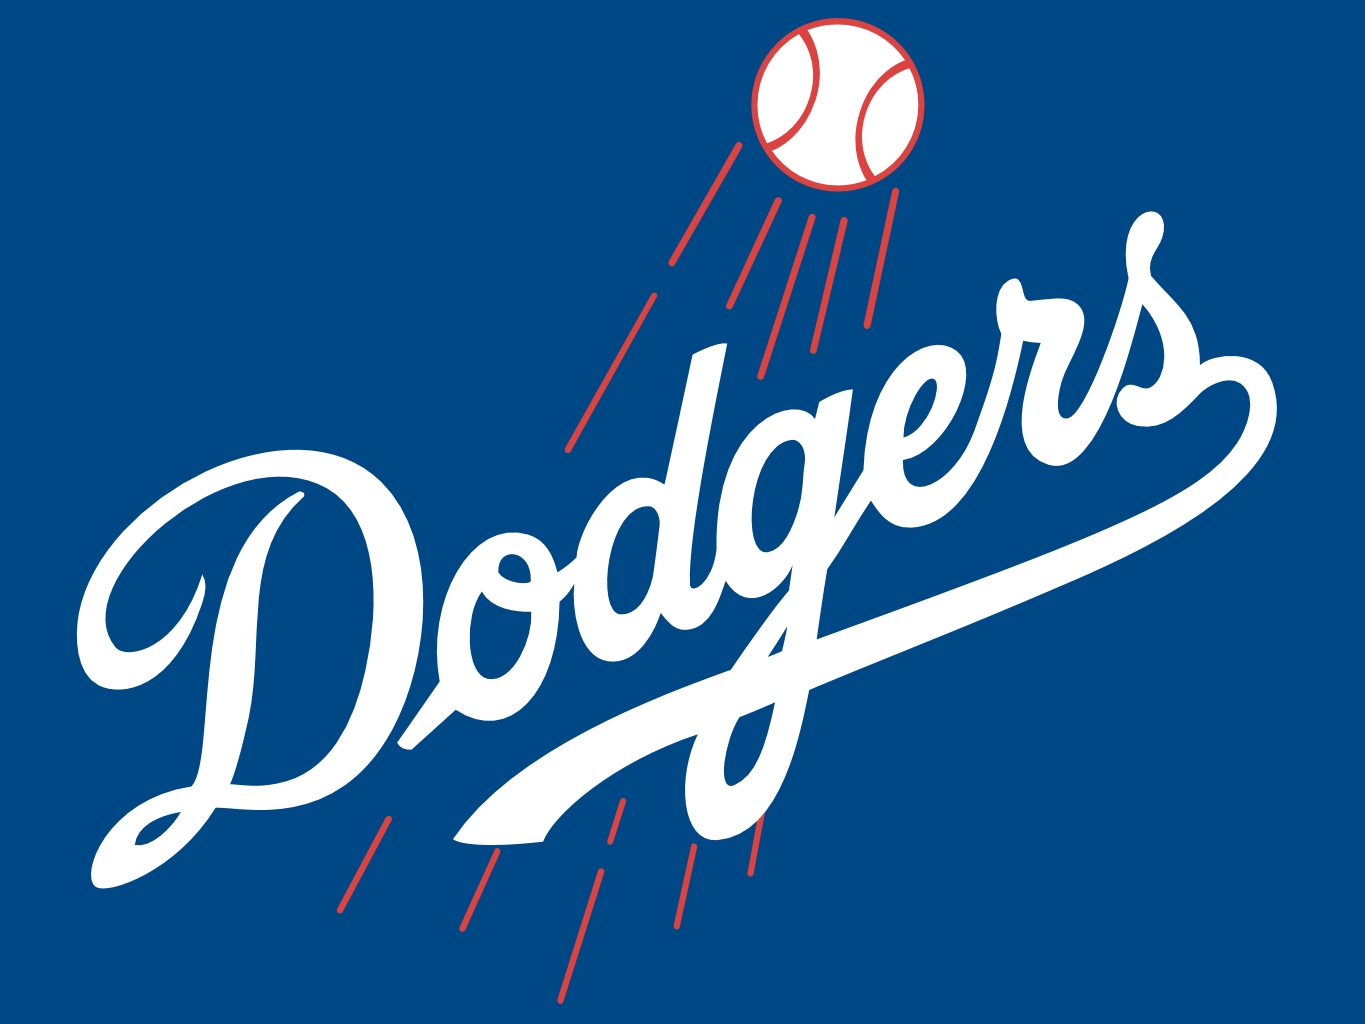 Los Angeles Dodgers Logo Wallpaper Image Galleries Imagekb